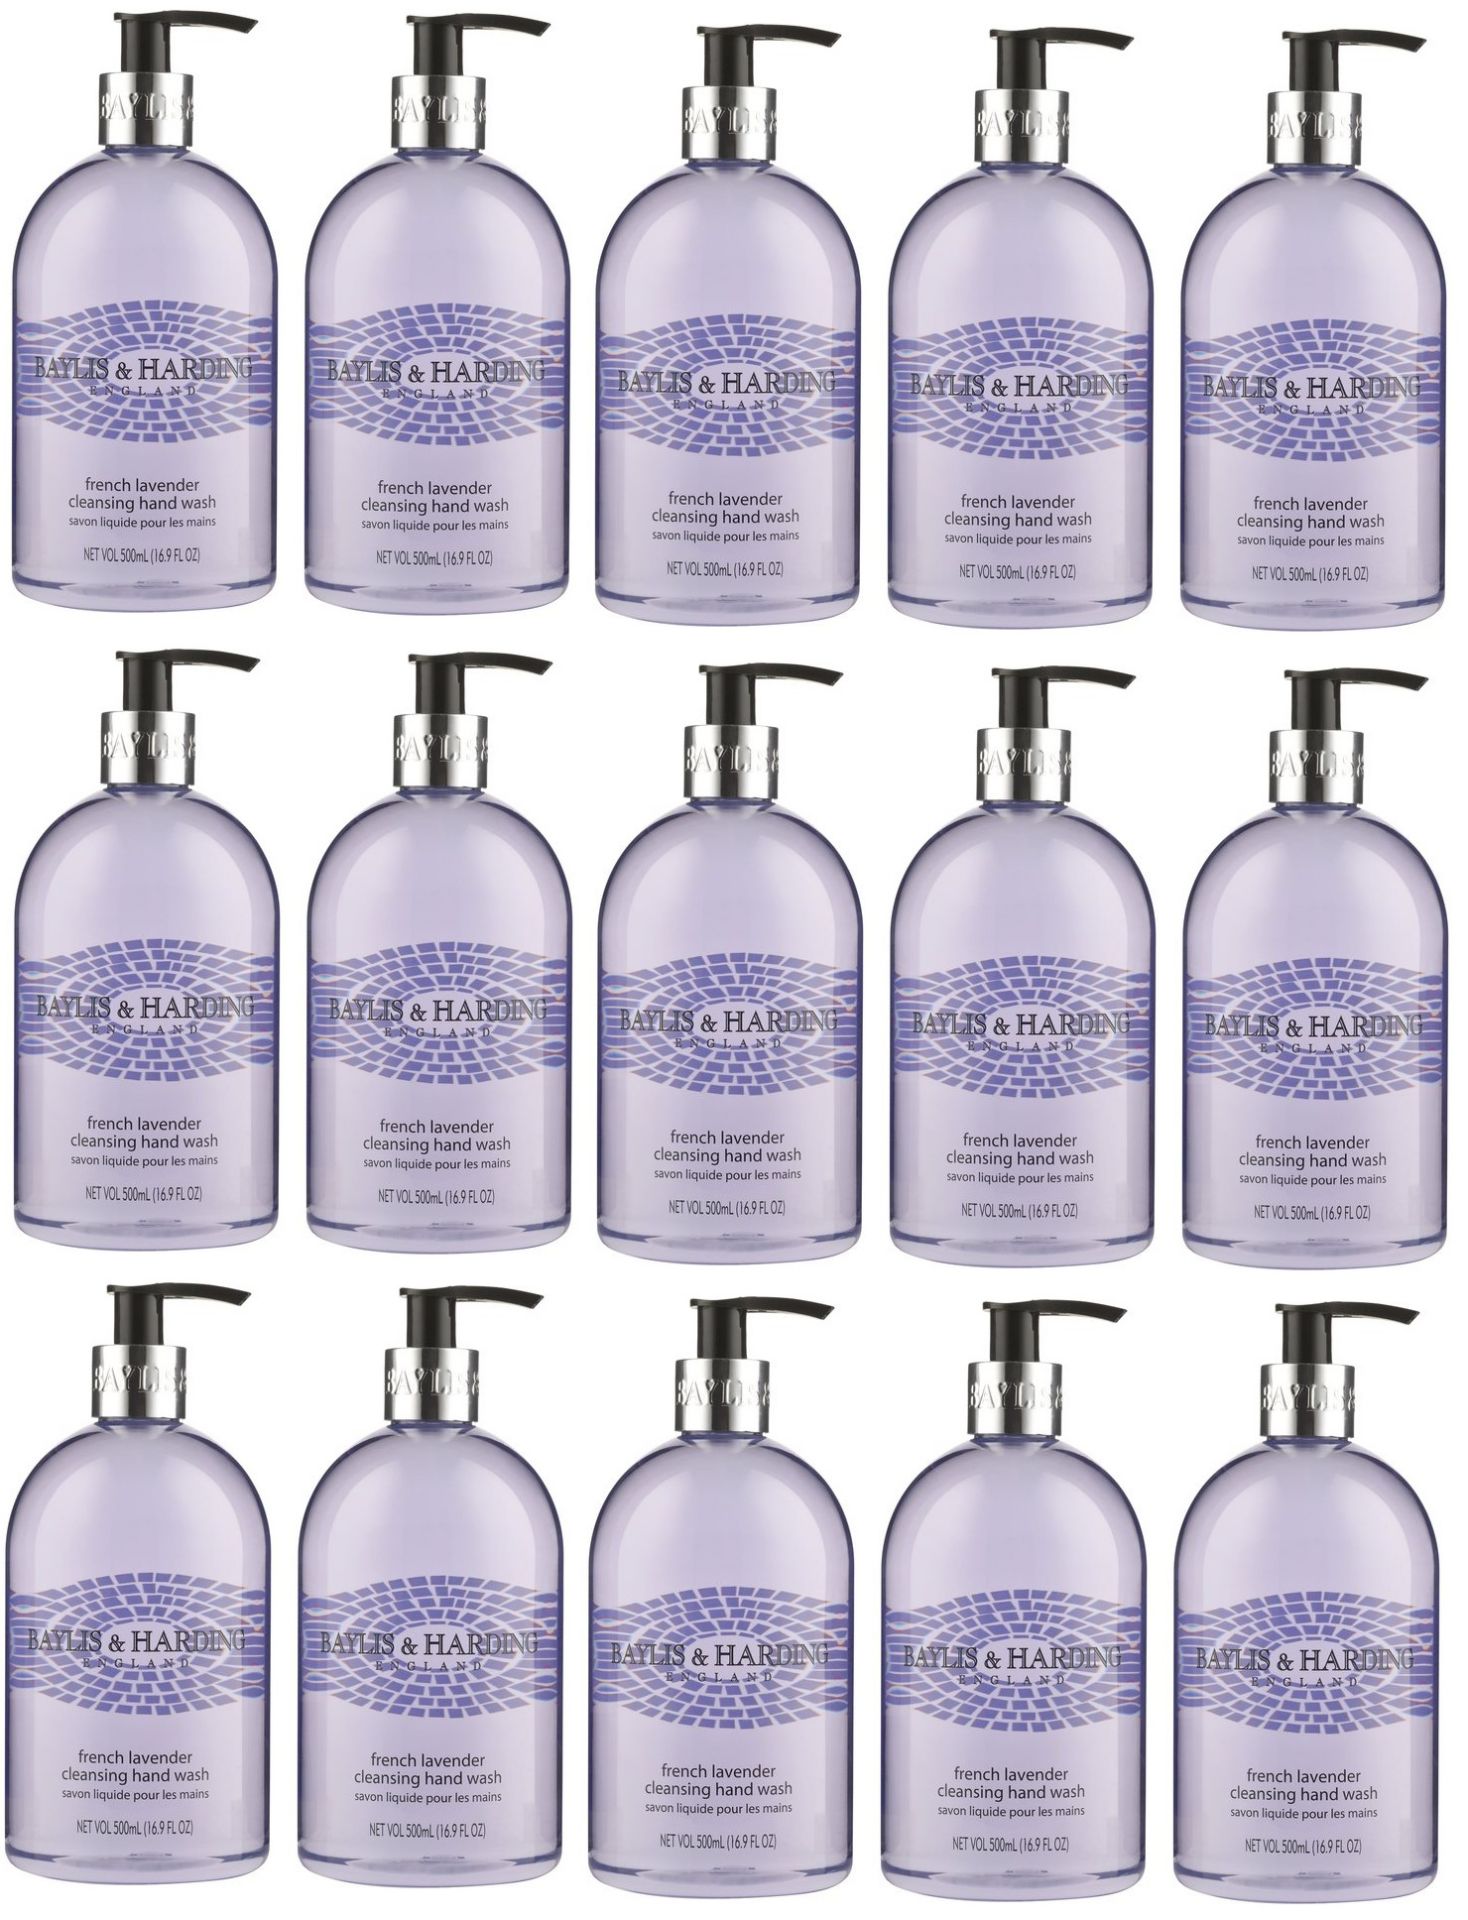 V Brand New 15 x 500ml Pump Bottles Of Baylis & Harding French Lavender Cleansing Hand Wash (7.5L